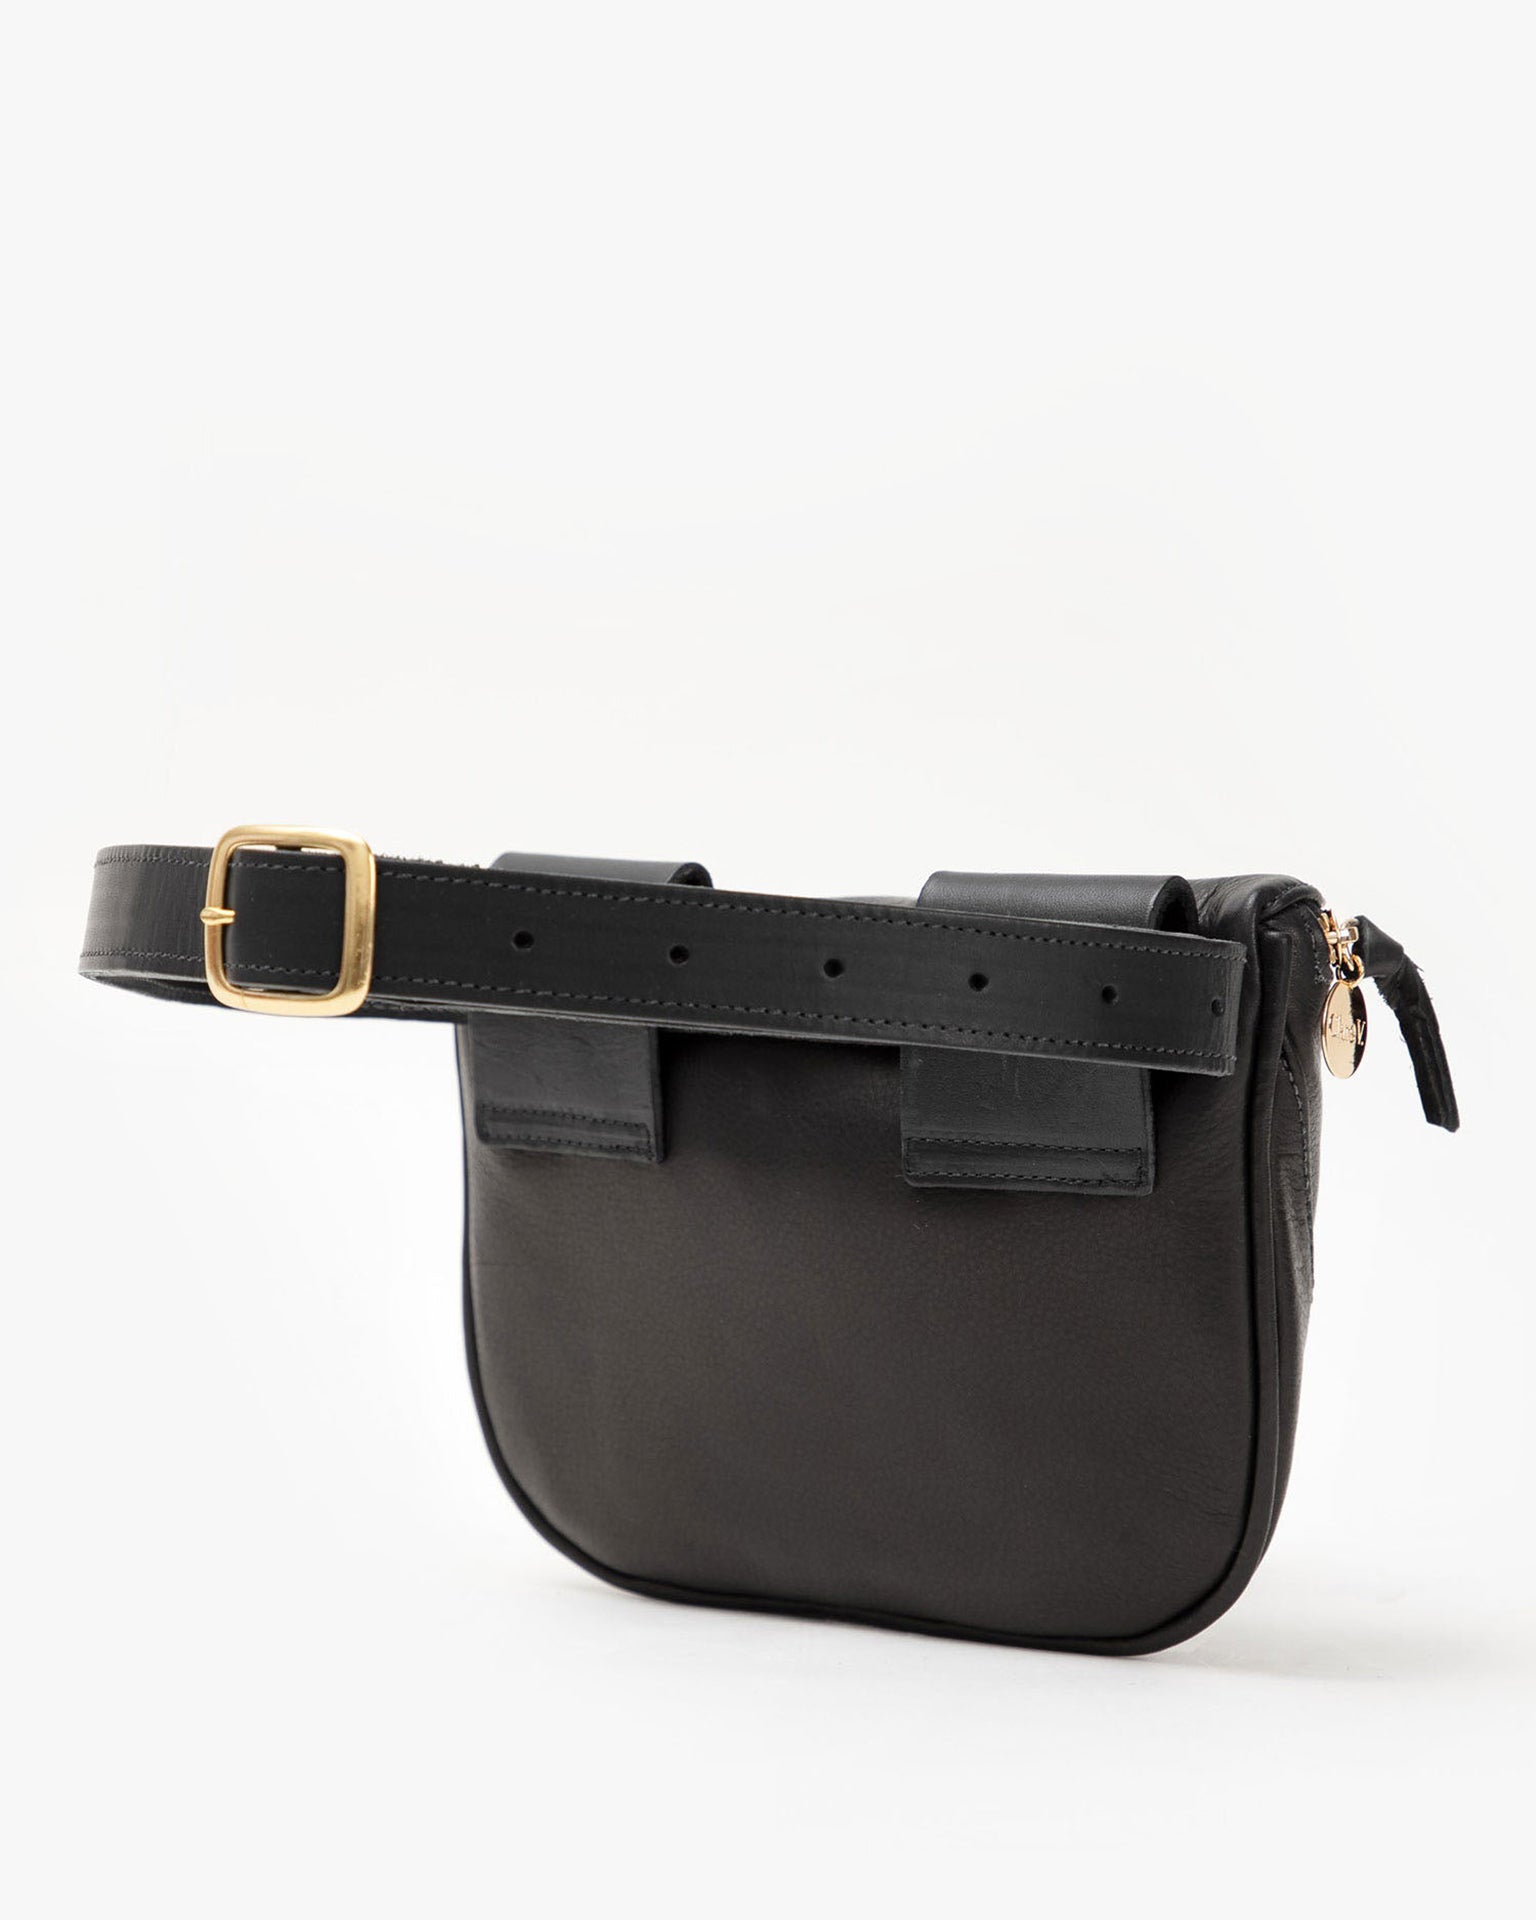 Clare V. Fannypack in Black Velvet Leather — Aggregate Supply